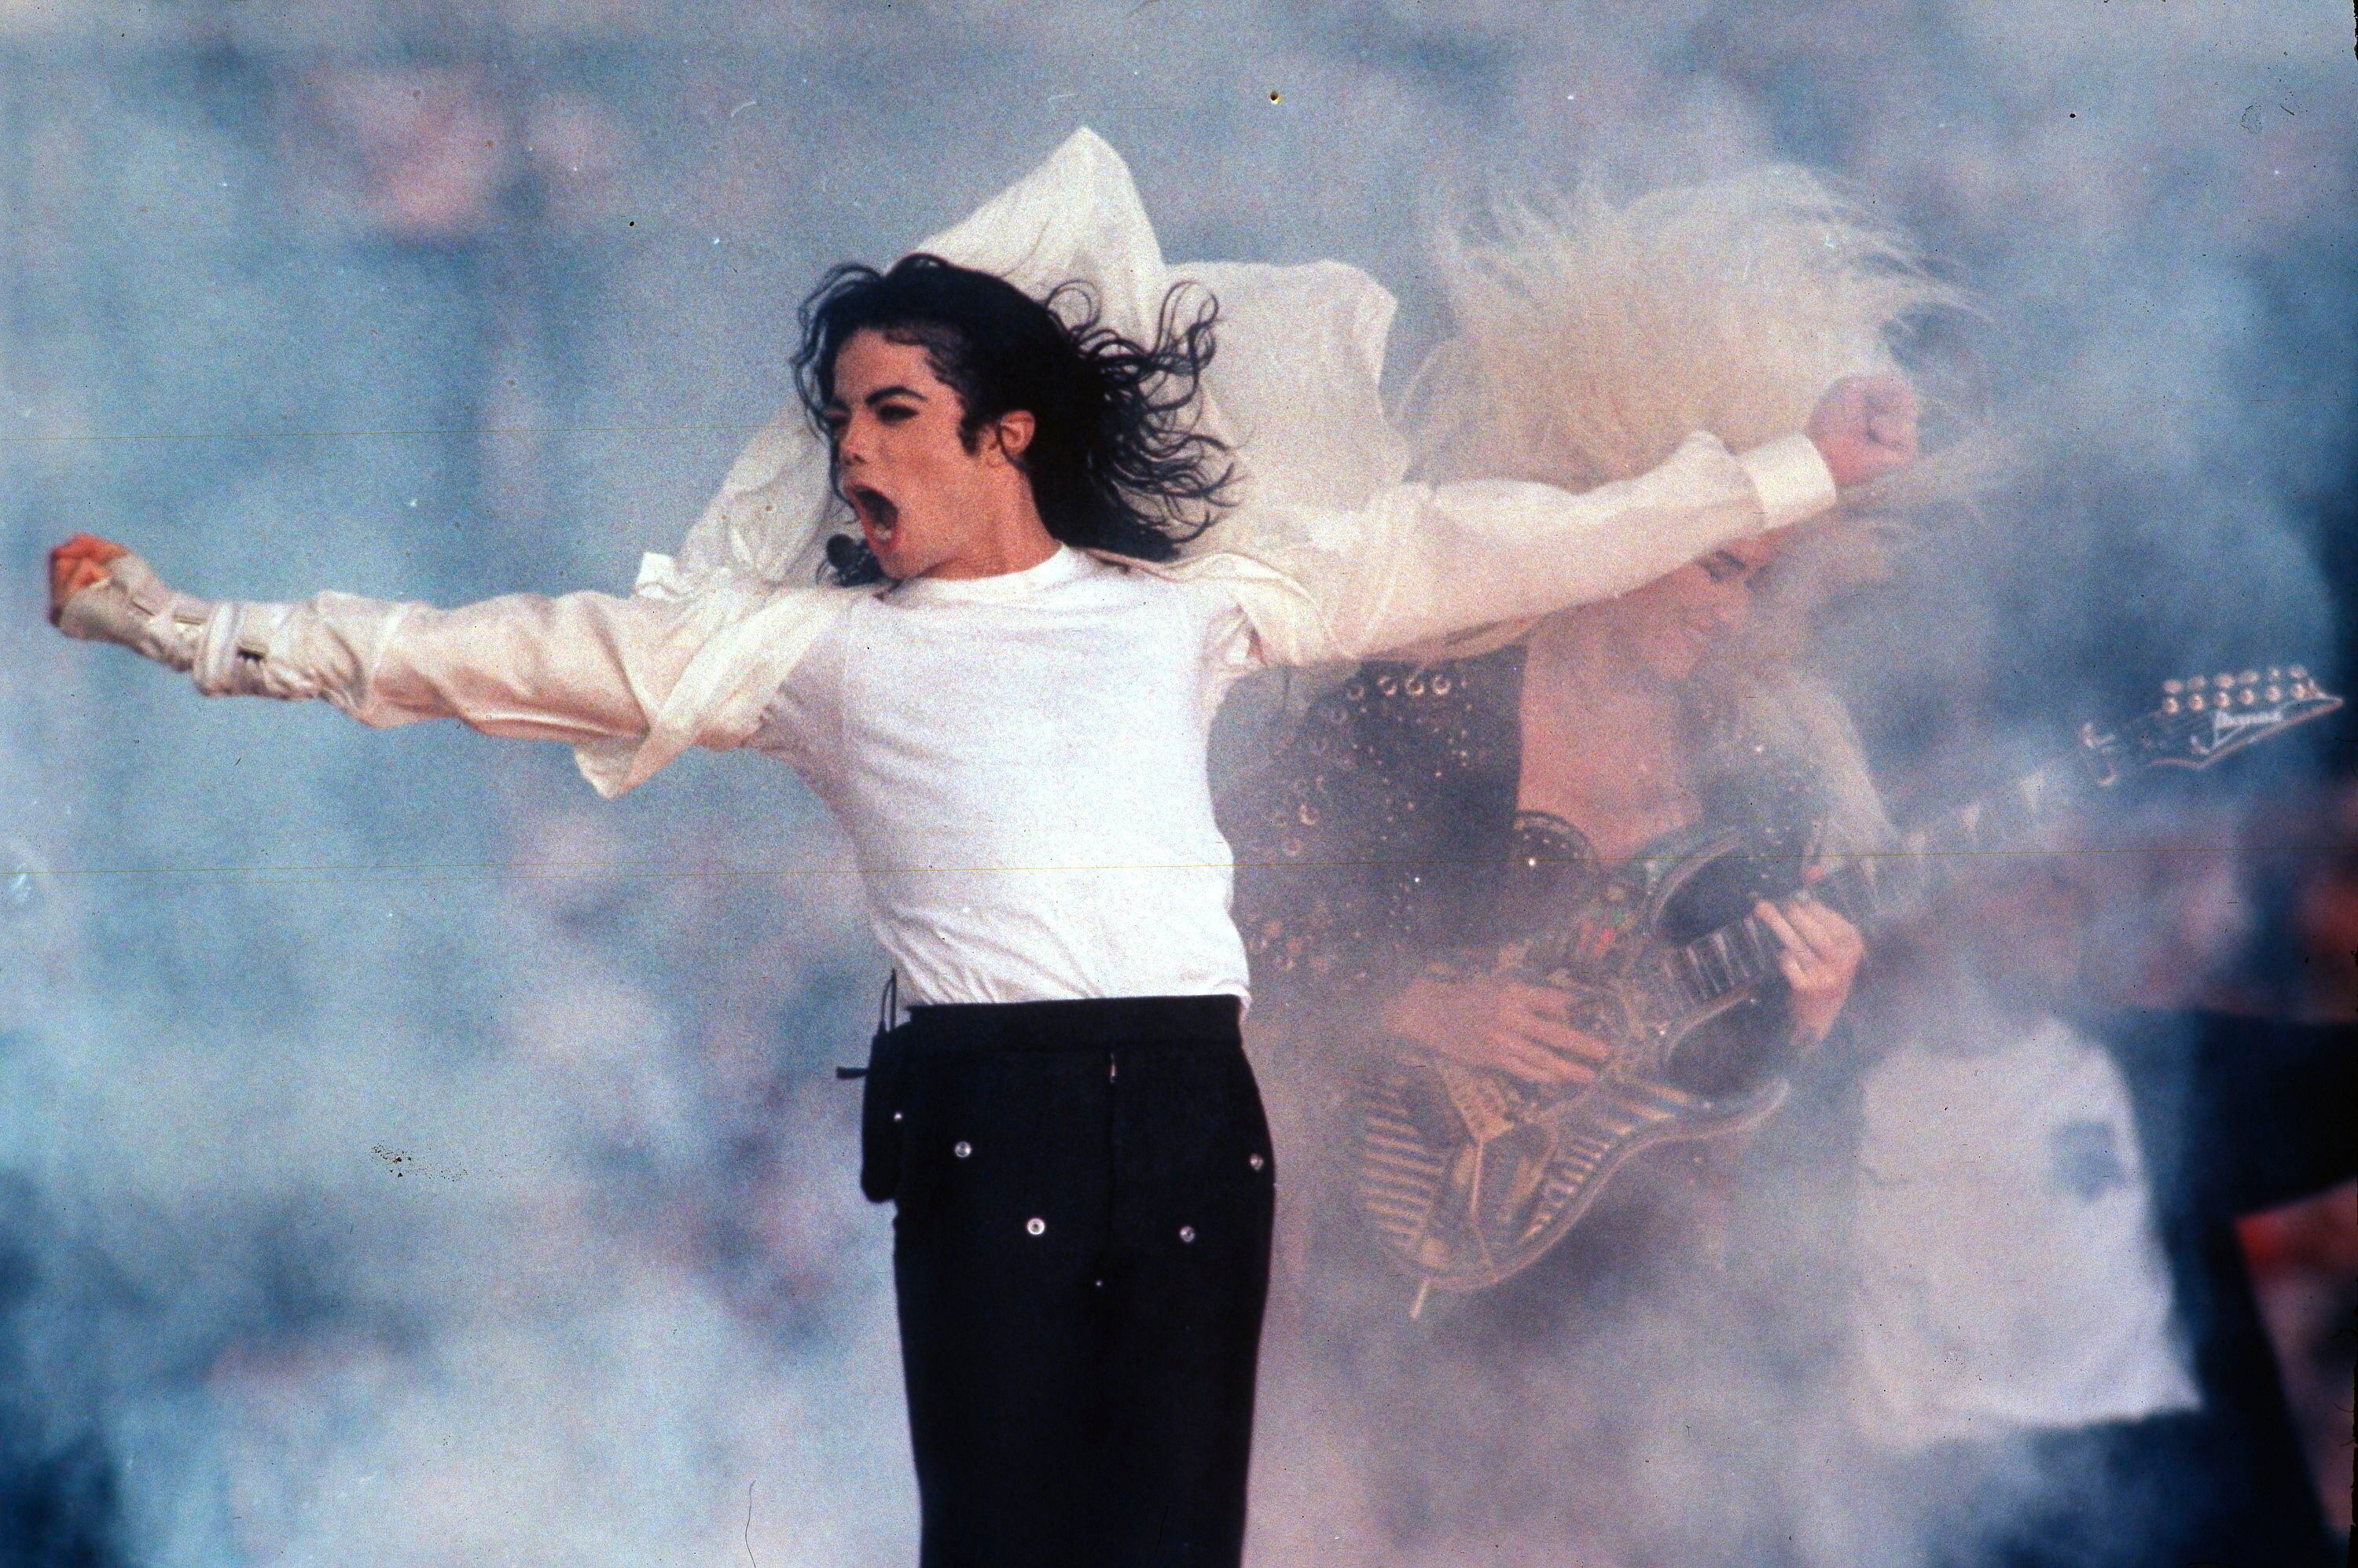 Michael Jackson film coming from Bohemian Rhapsody producer